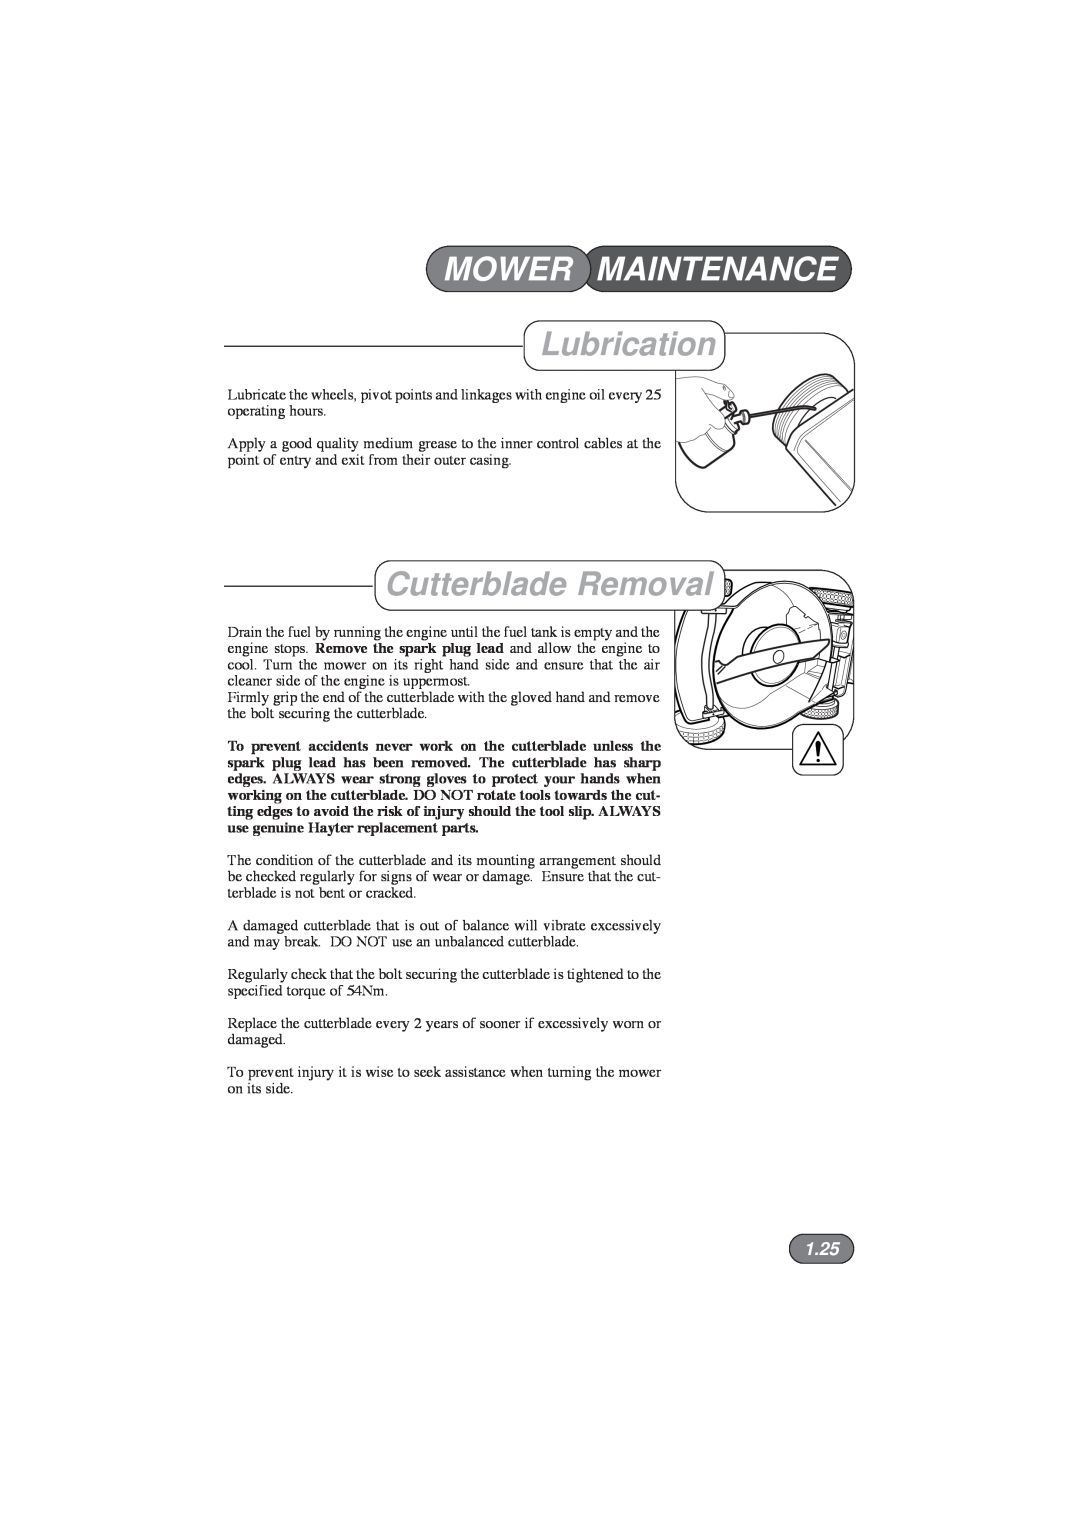 Hayter Mowers 434D, 435D, 433D, 432D manual Lubrication, Cutterblade Removal, 1.25, Mower Maintenance 